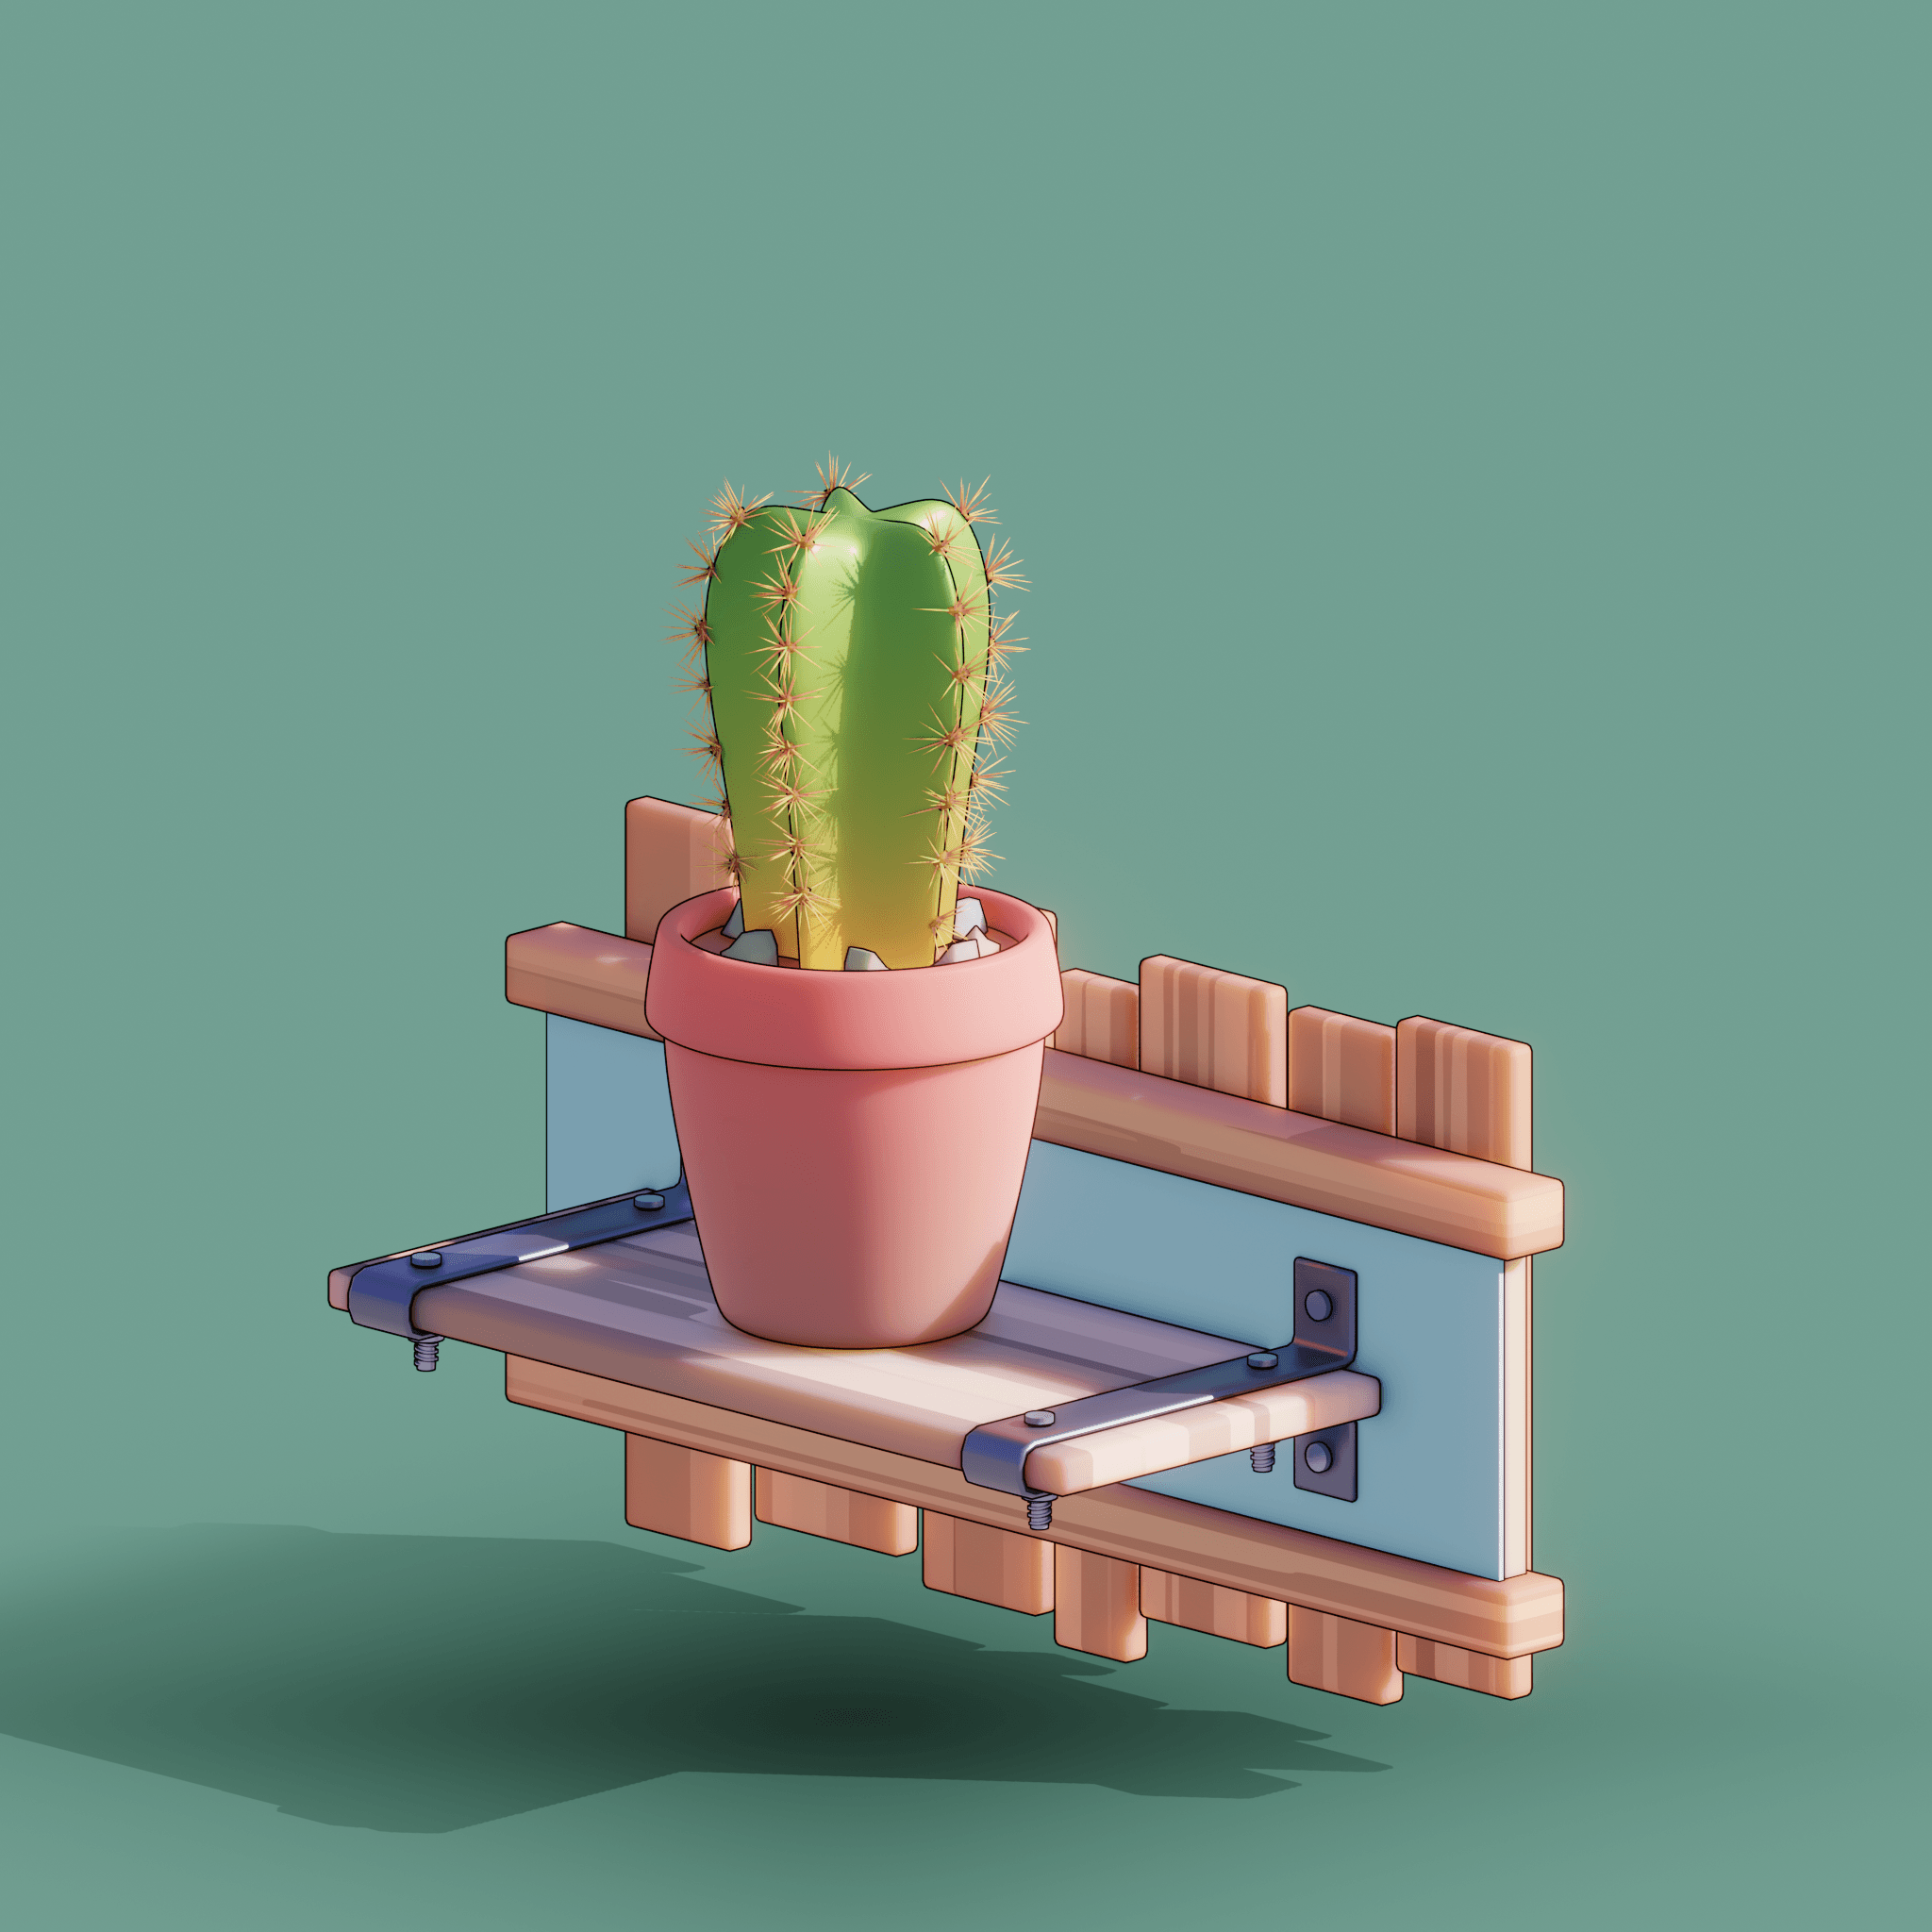 Cactus On a Shelf